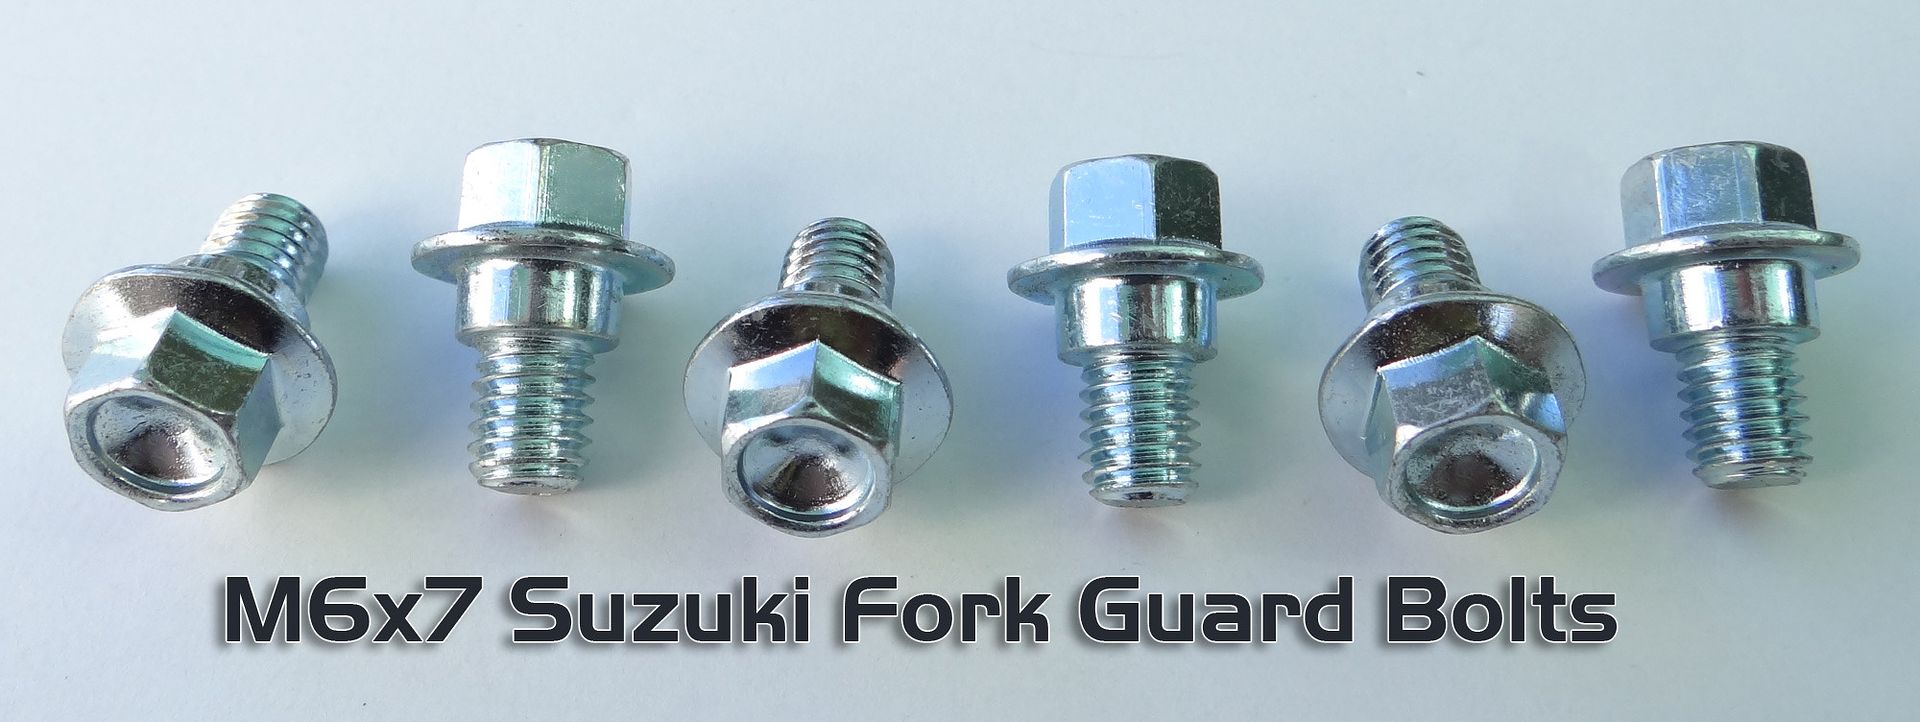 SPECBOLT SUZUKI FORK GUARD BOLTS photo M6x7-Suzuki-Fork-Guard-Bolts_zpshhkhizc3.jpg